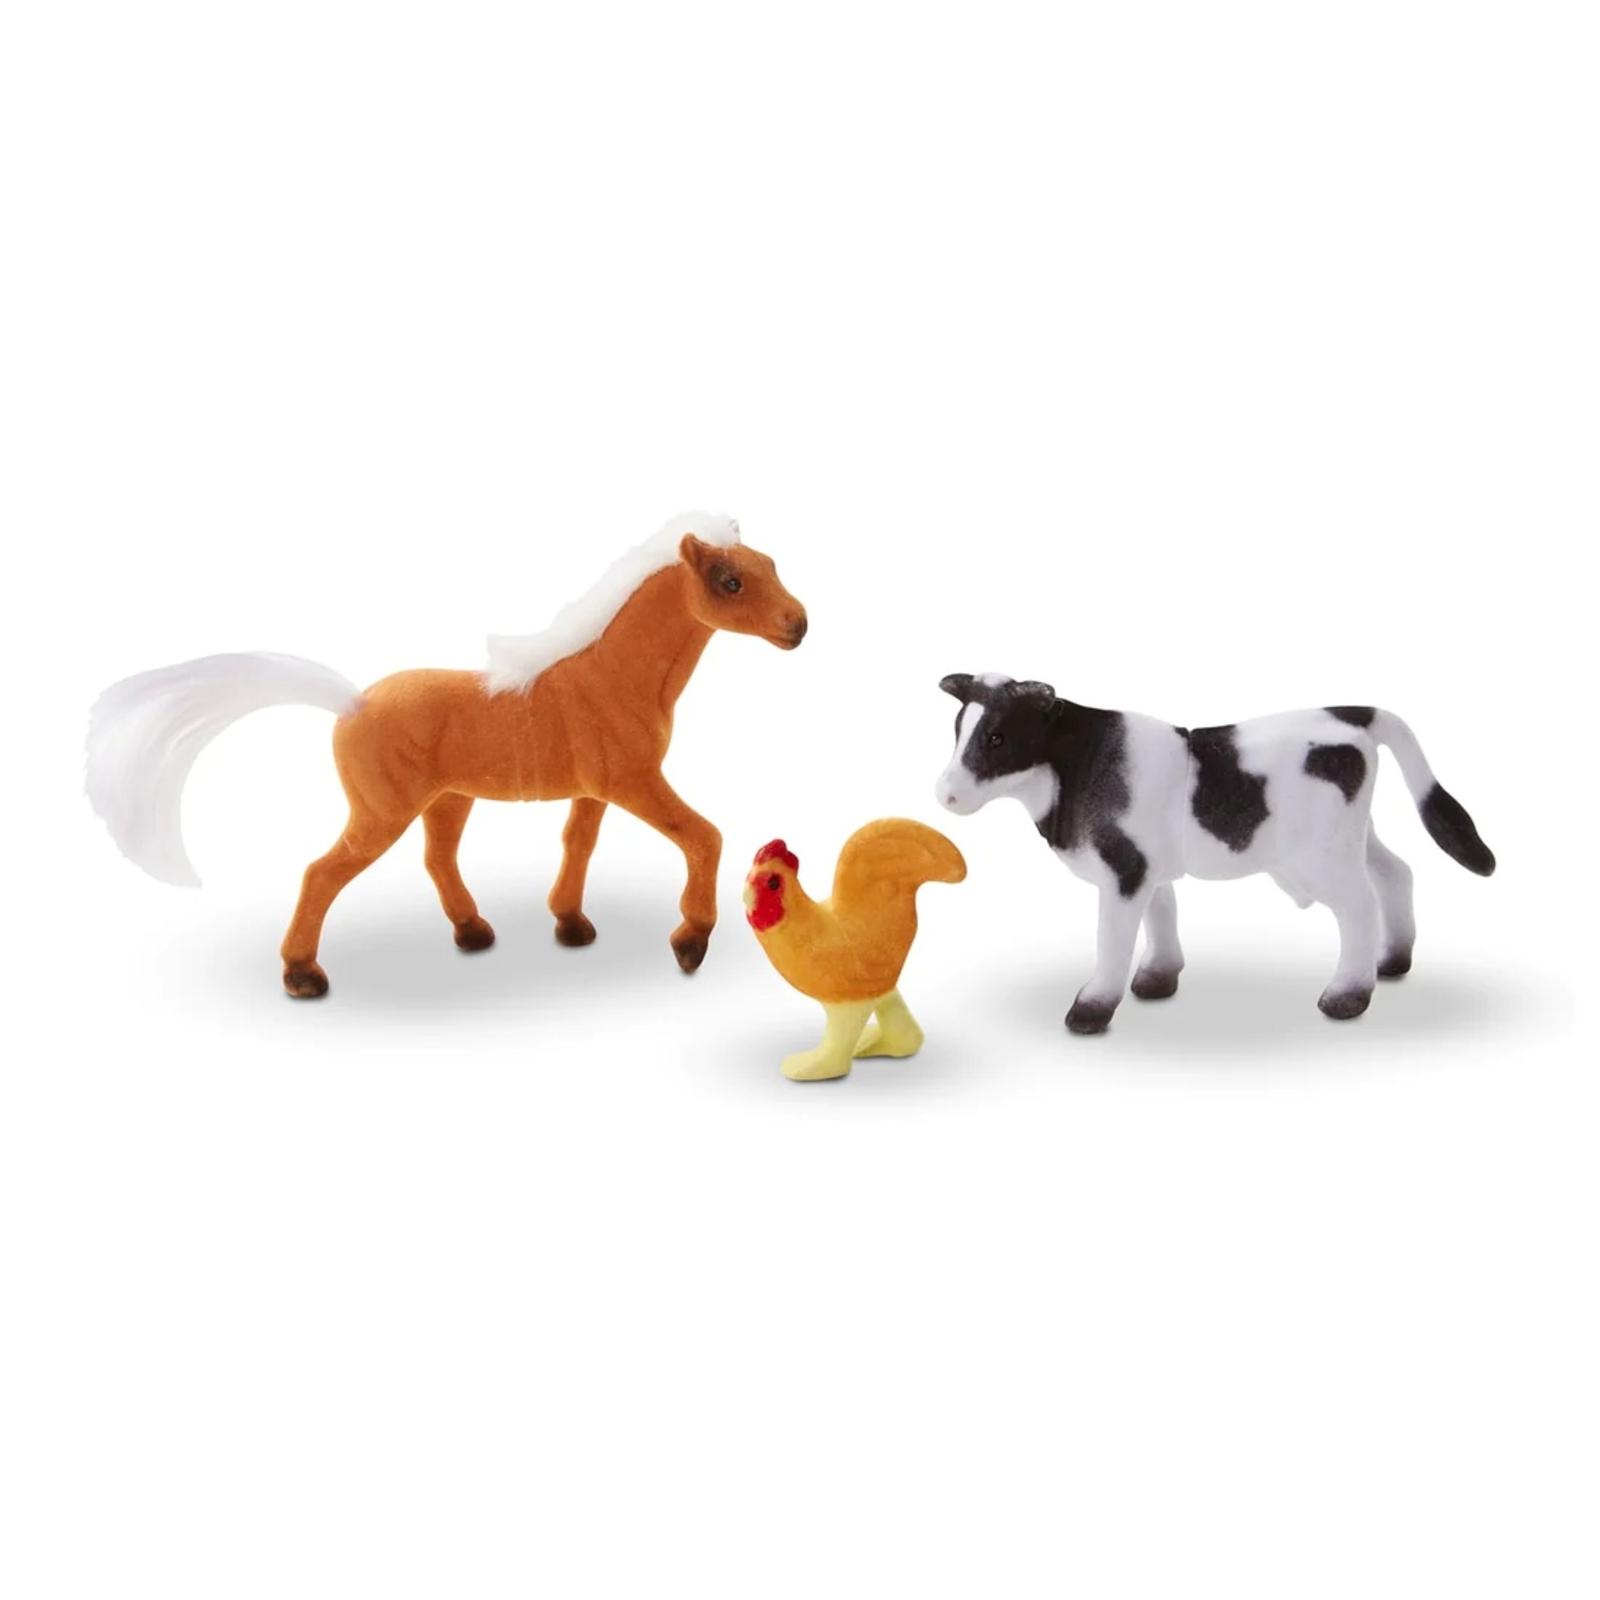 Melissa & Doug Farm Friends - 10 Collectible Farm Animals